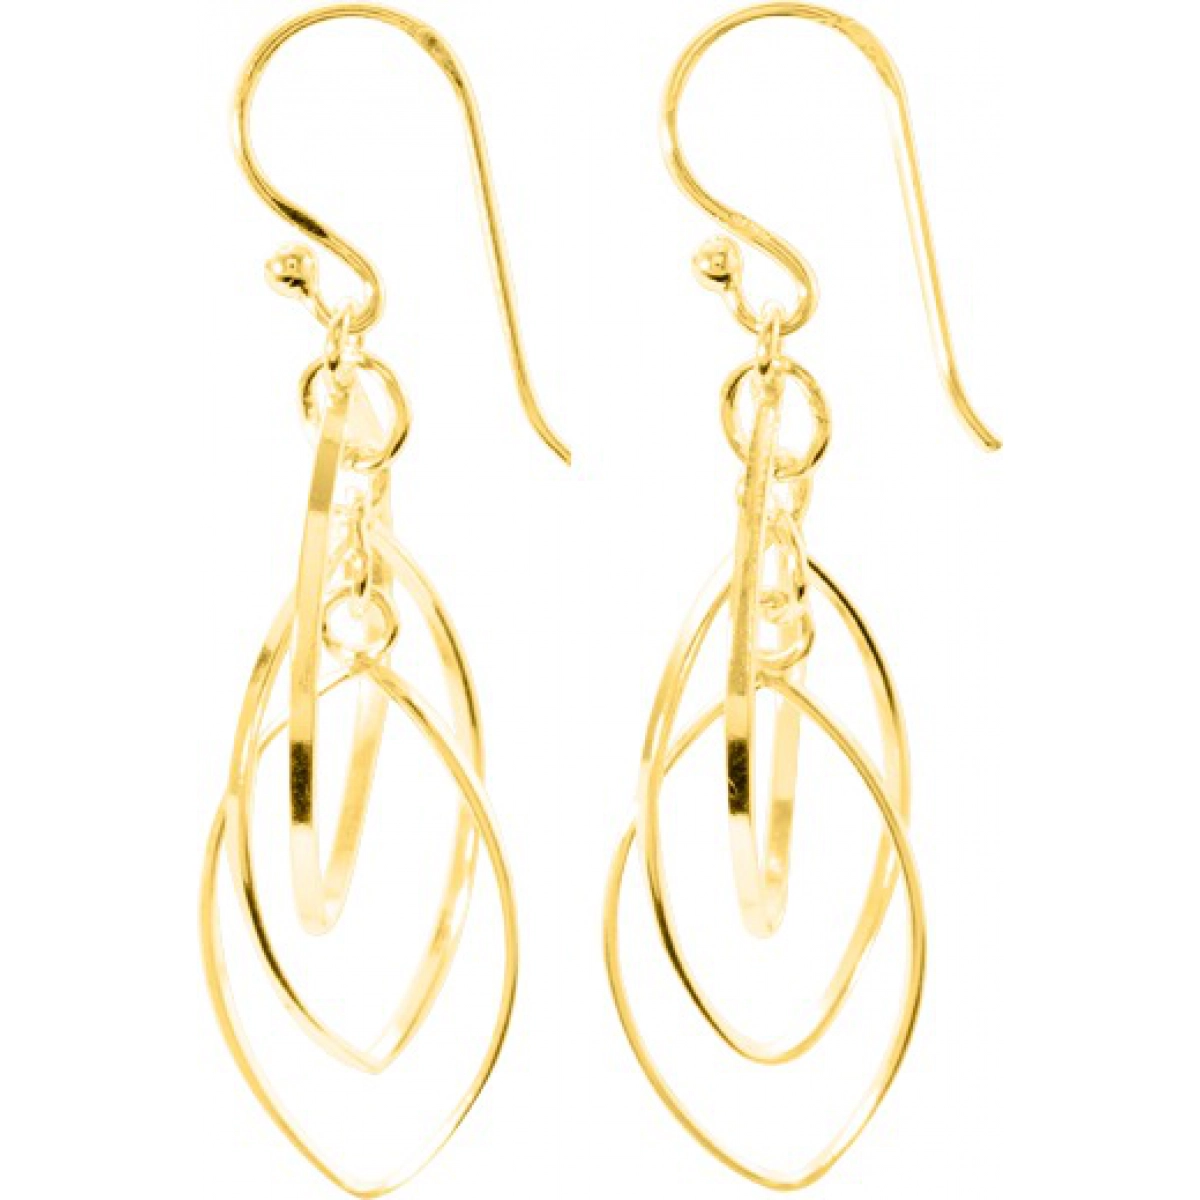 Earrings pair gold plated Brass Lua Blanca  258422 